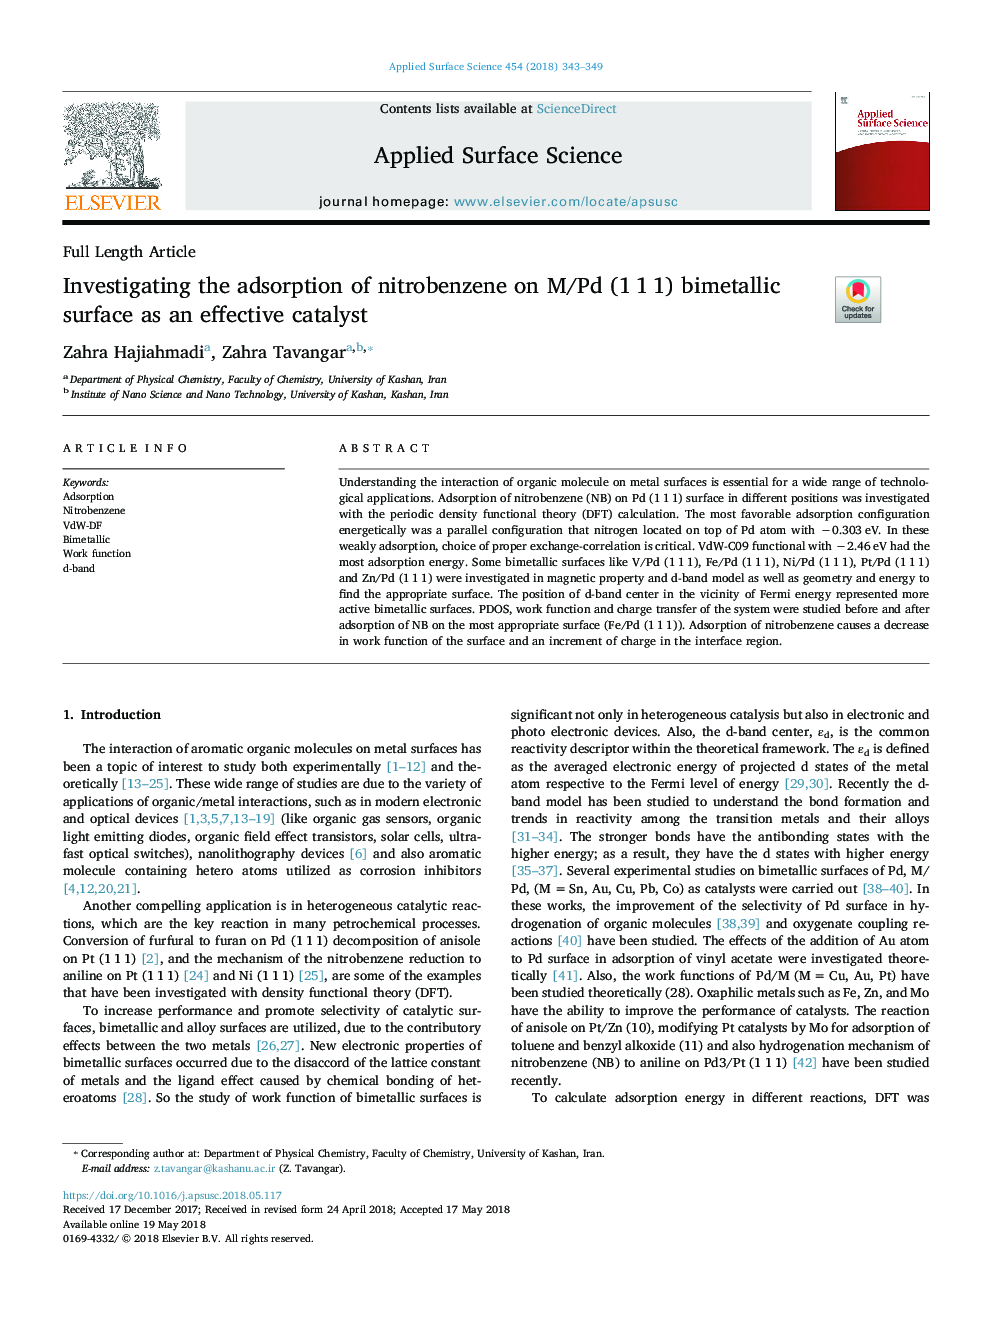 Investigating the adsorption of nitrobenzene on M/Pd (1â¯1â¯1) bimetallic surface as an effective catalyst